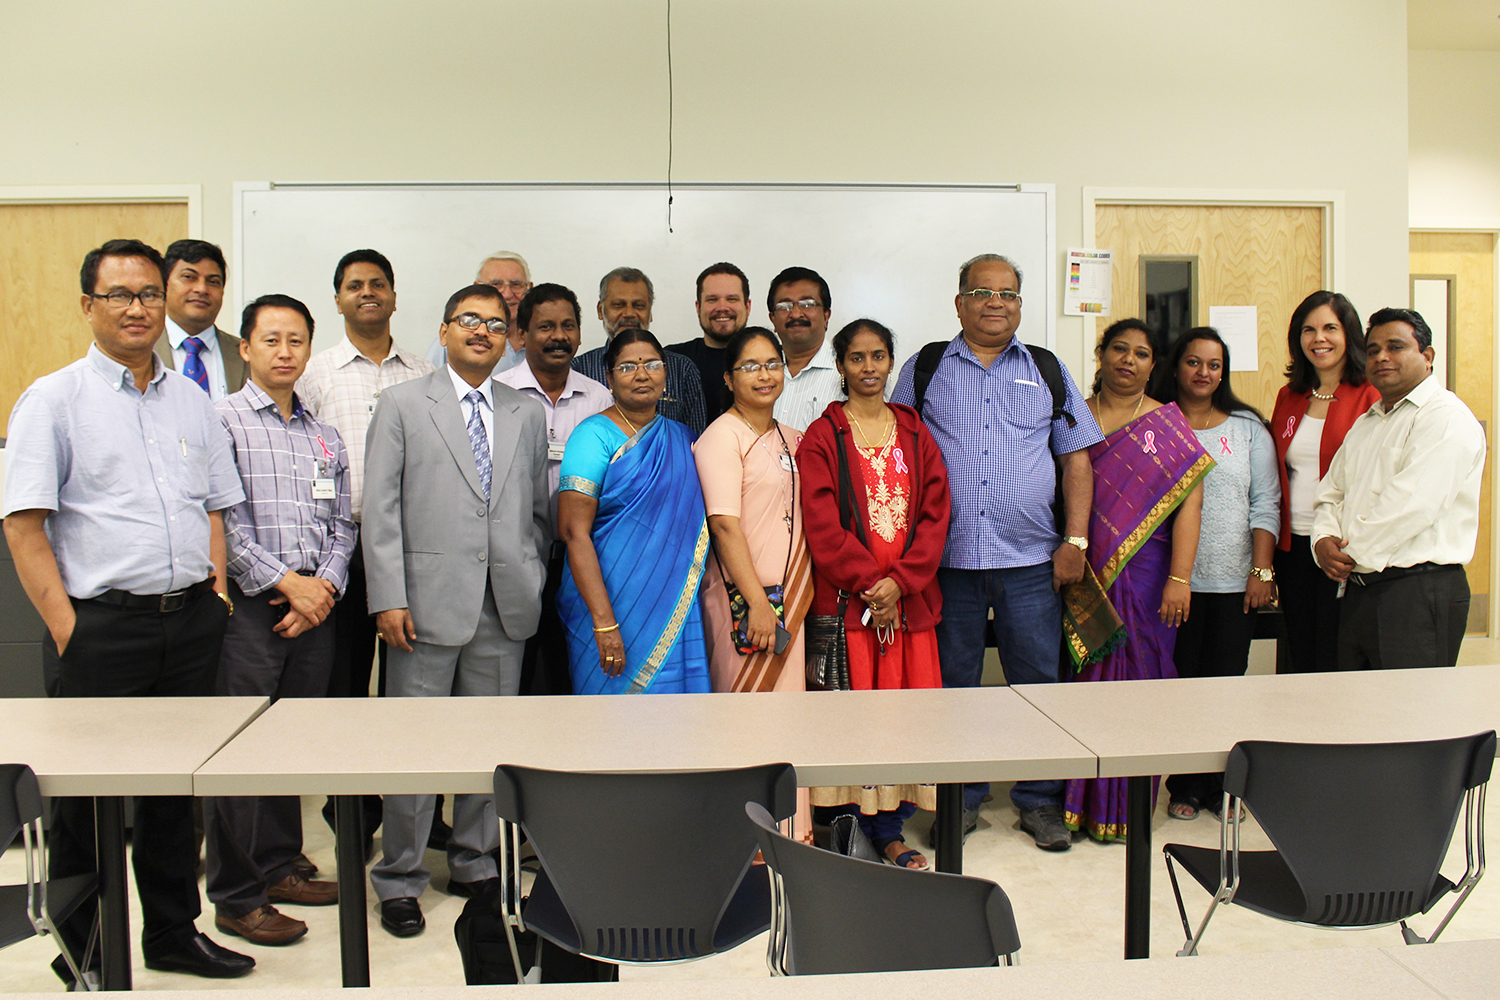 "India CCAP group photo inside a classroom"